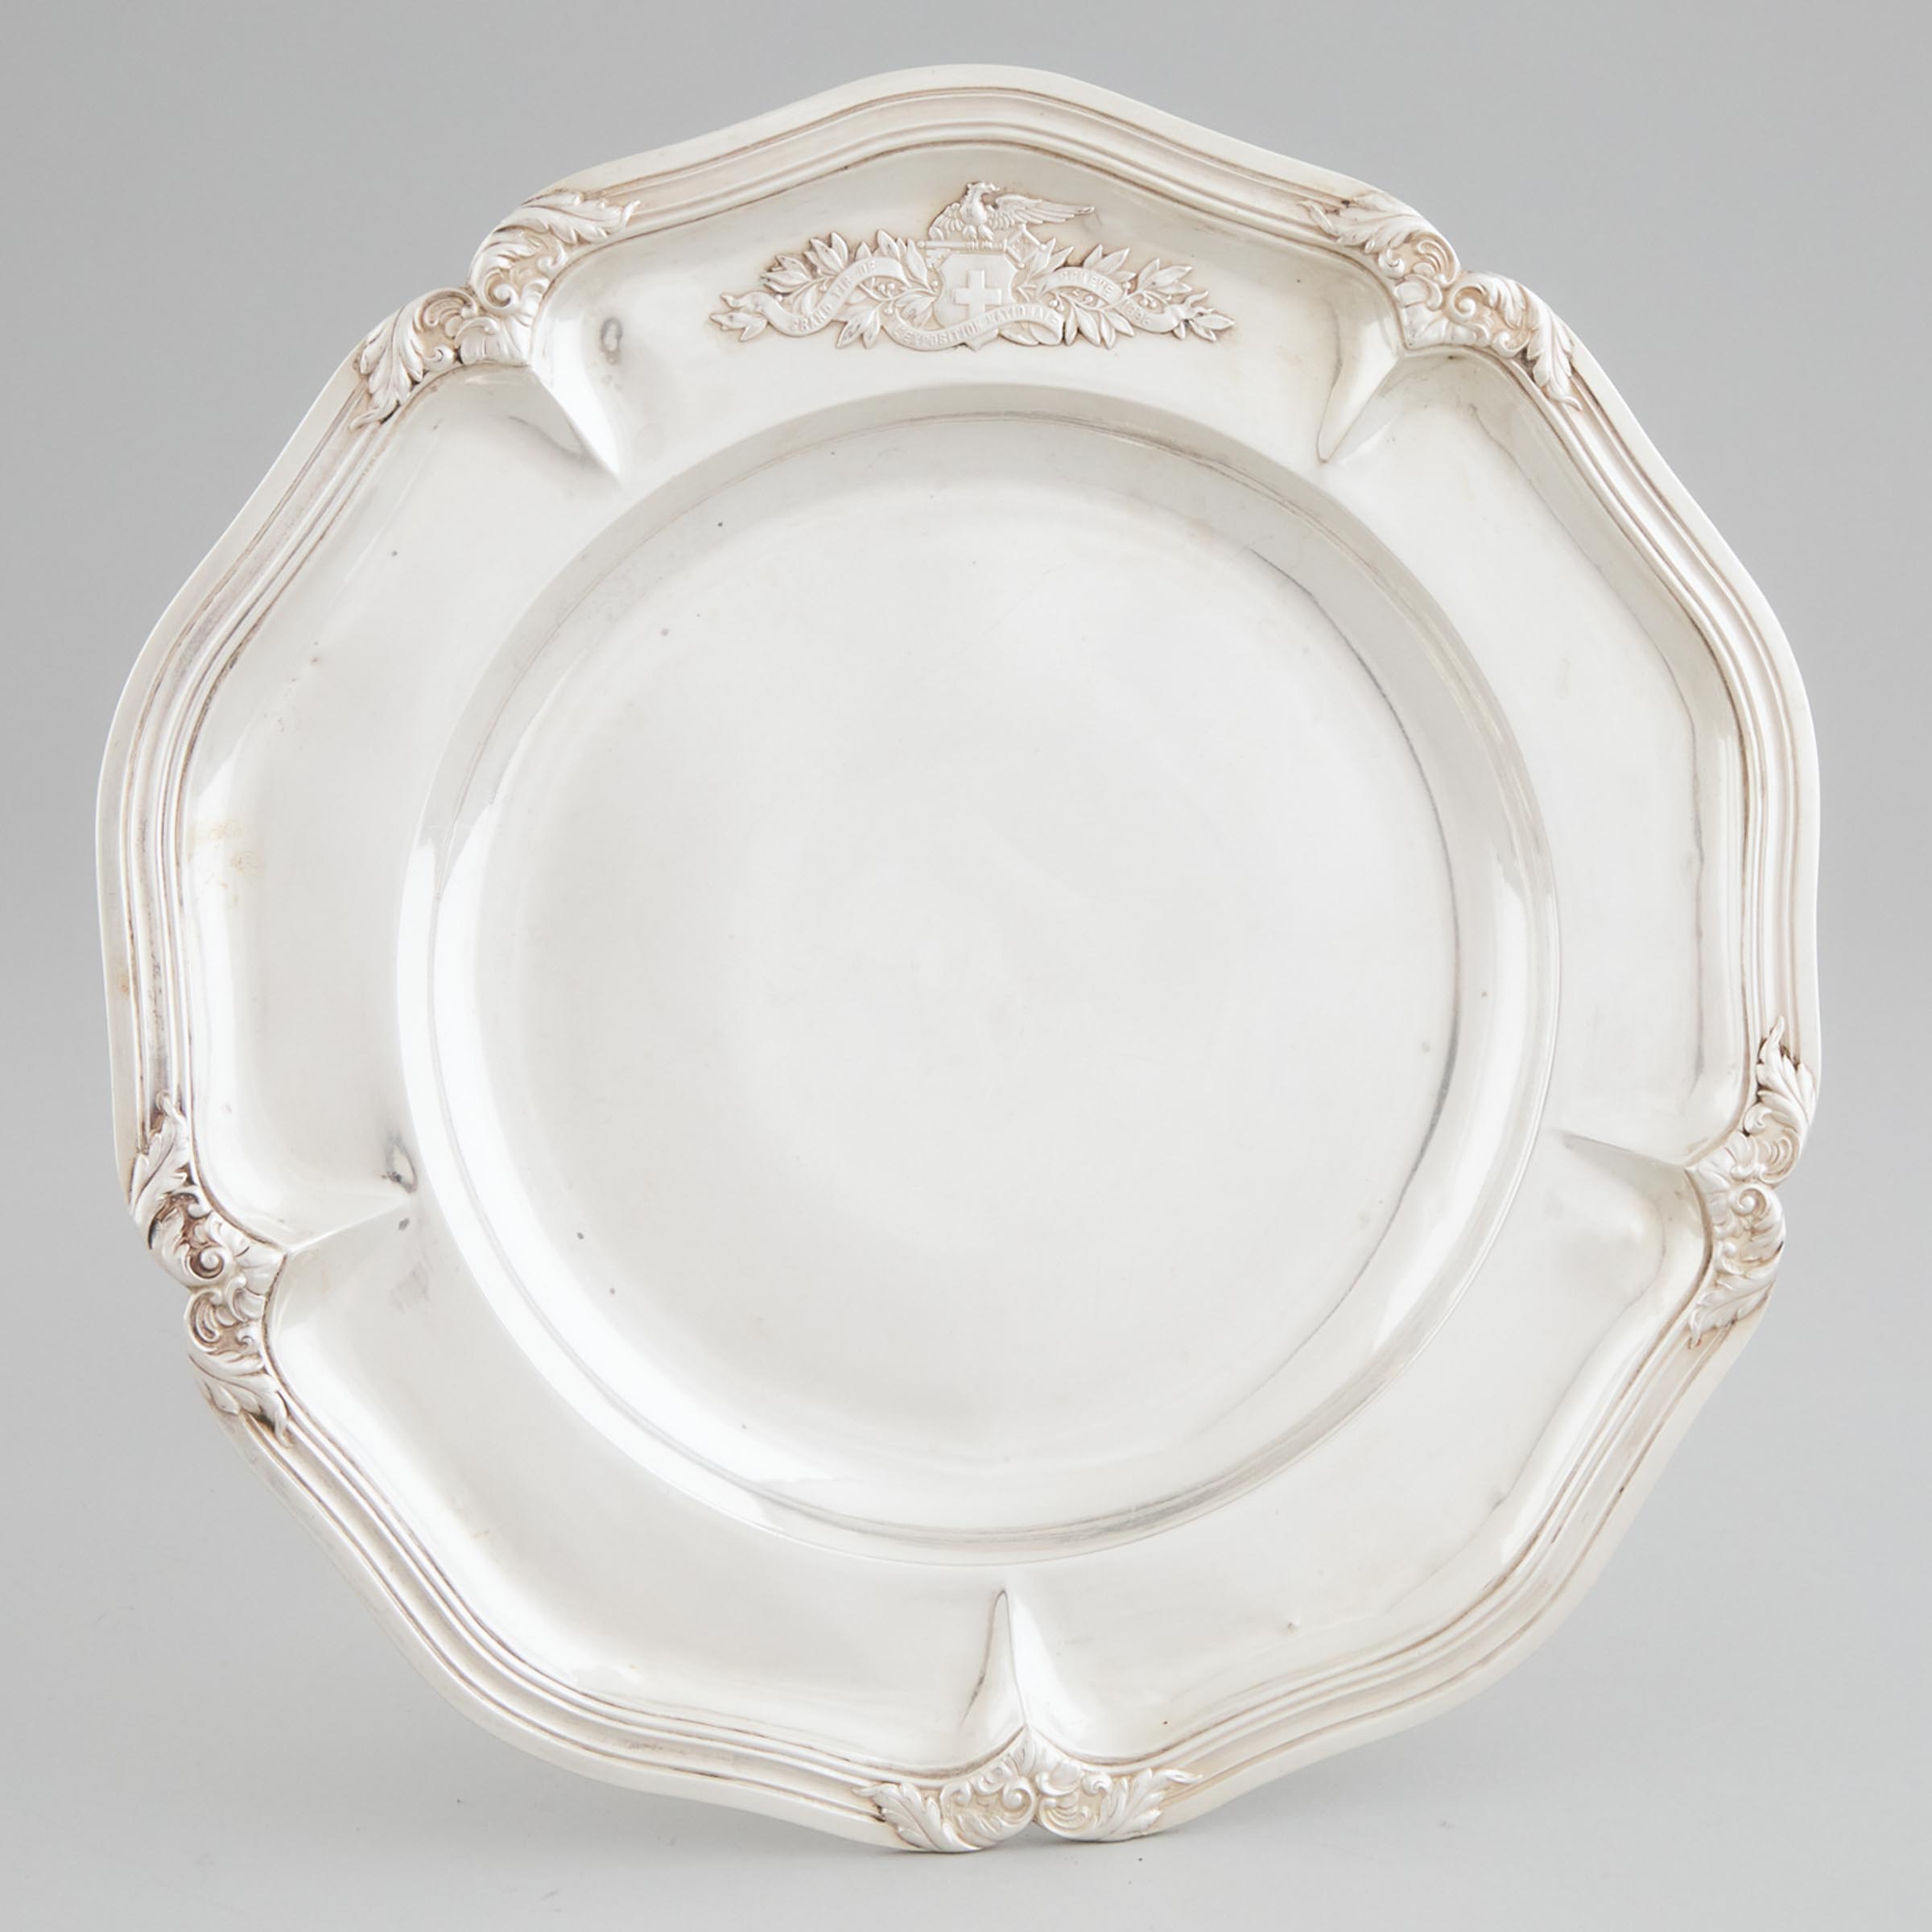 Swiss Silver Shaped Circular Plate, Louis Mugnier, c.1896